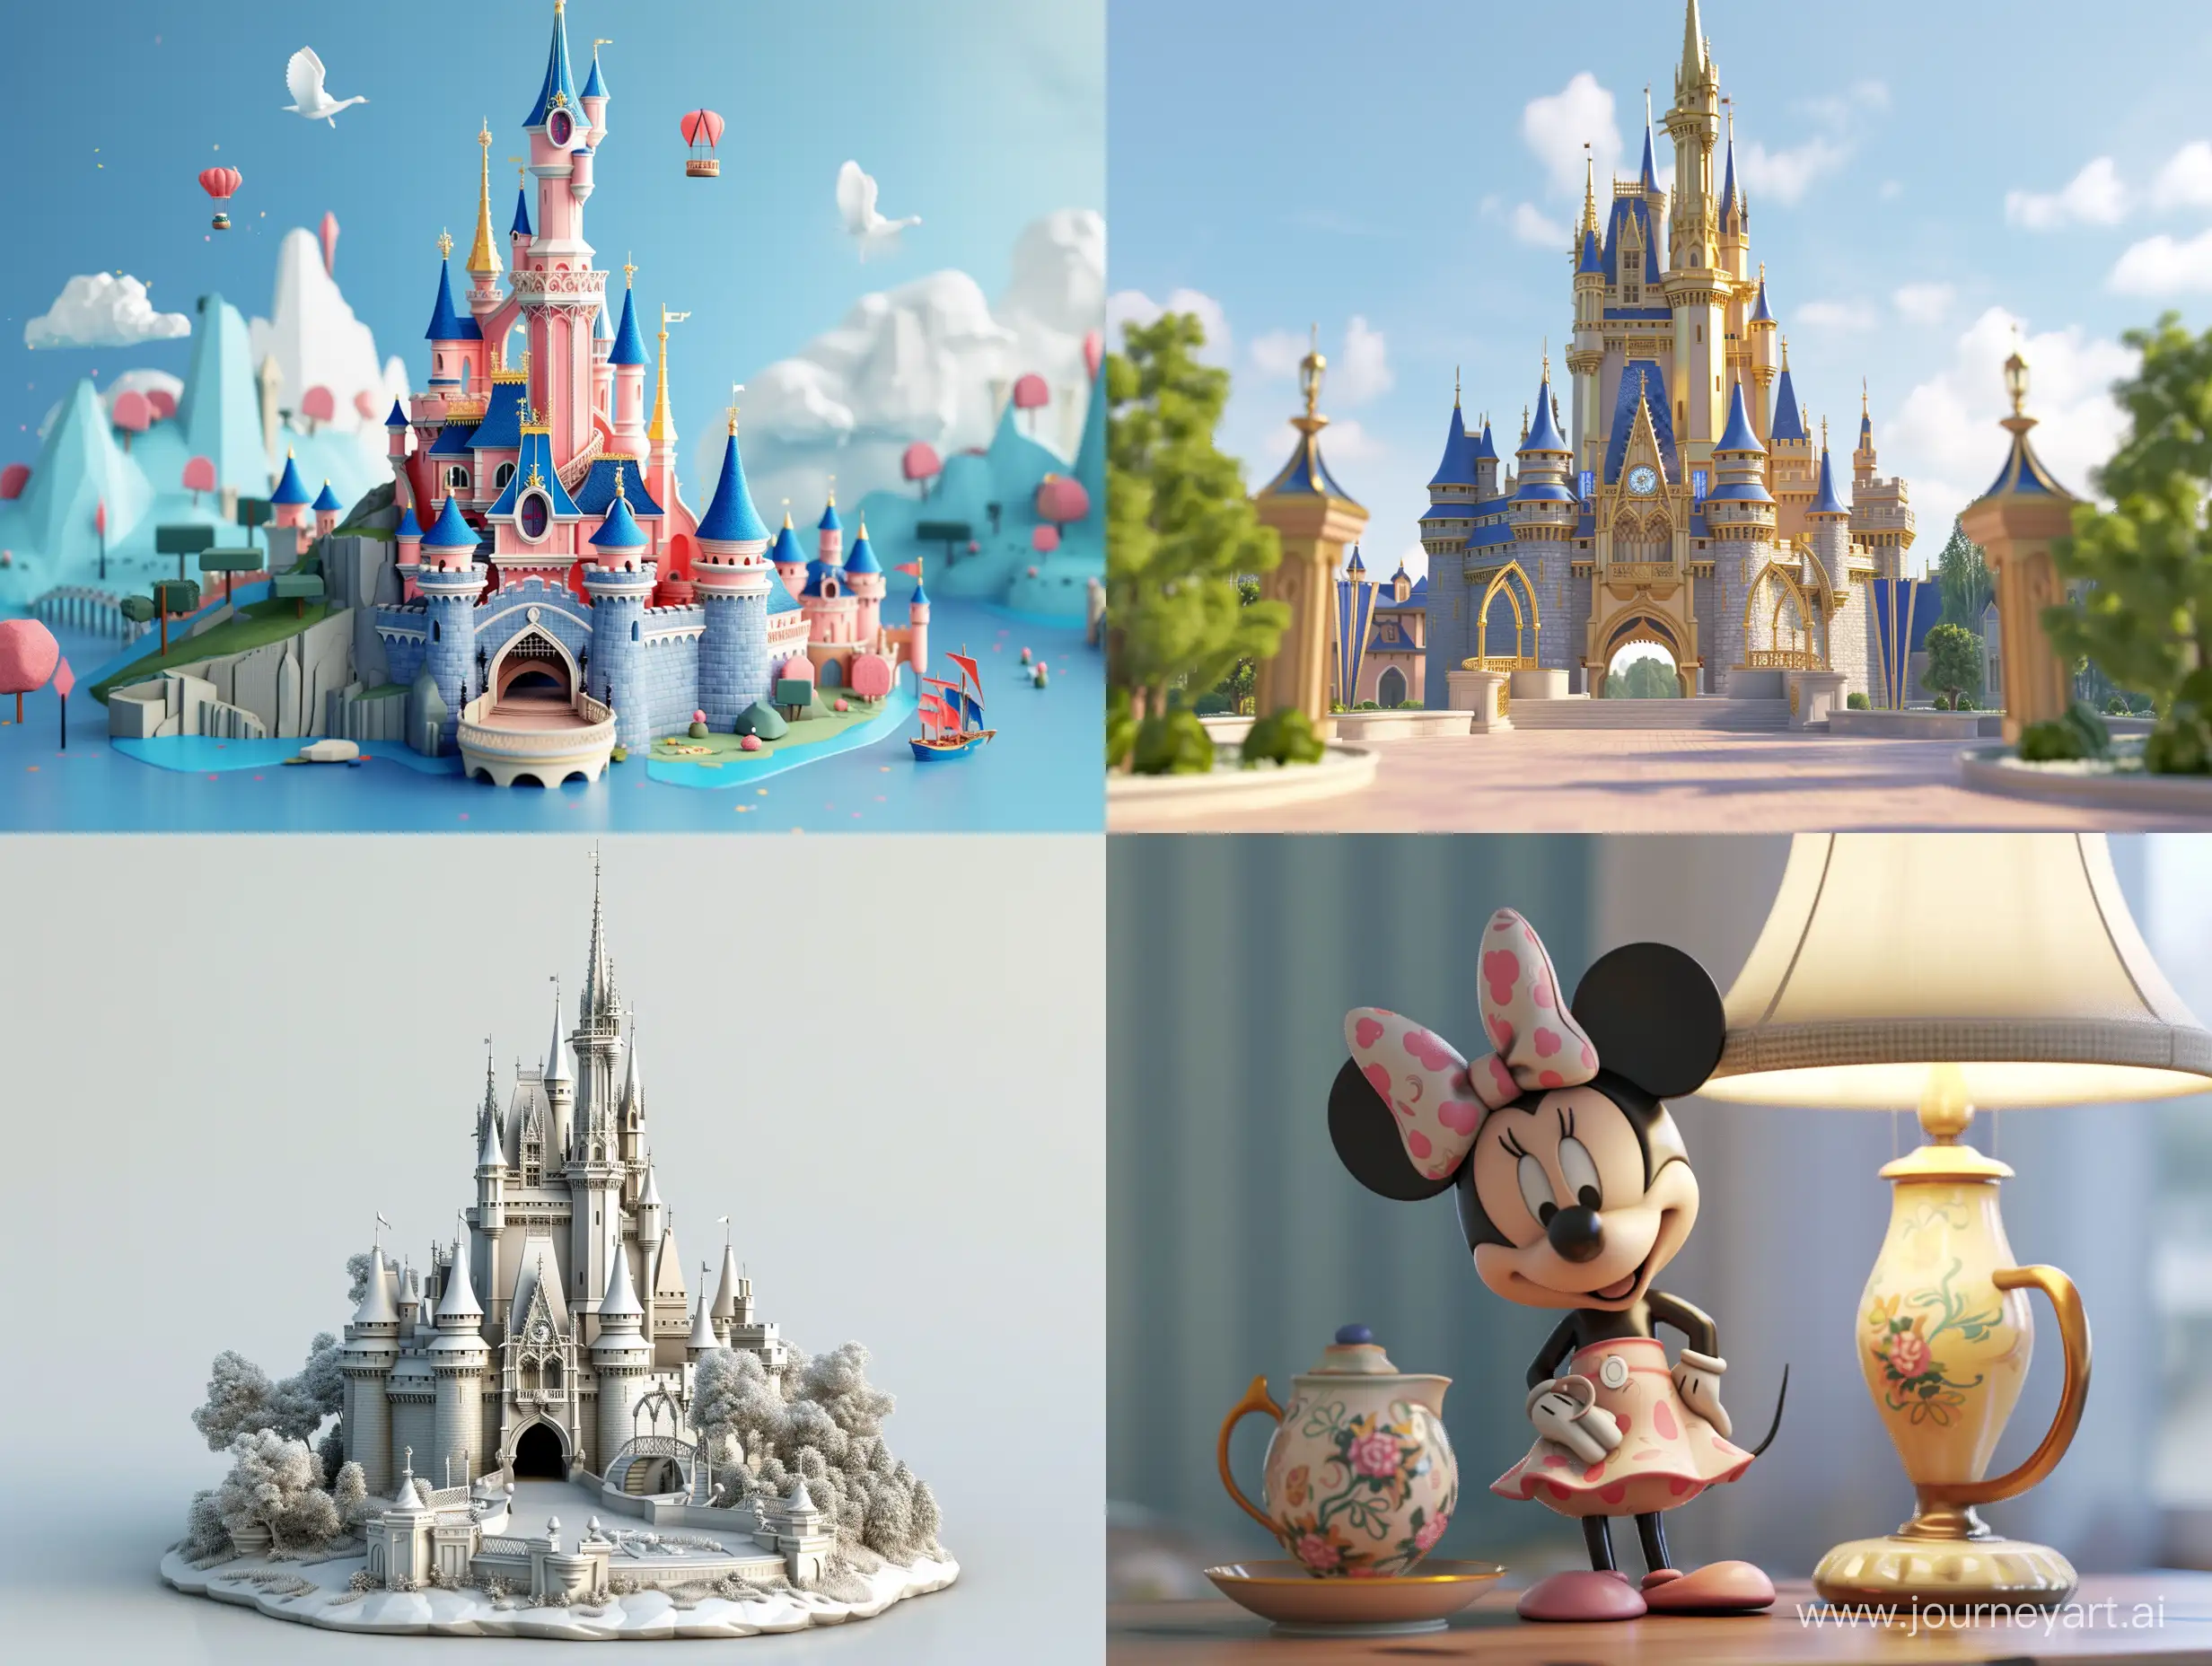 Disneystyle-3D-Render-of-Vibrant-Fantasy-World